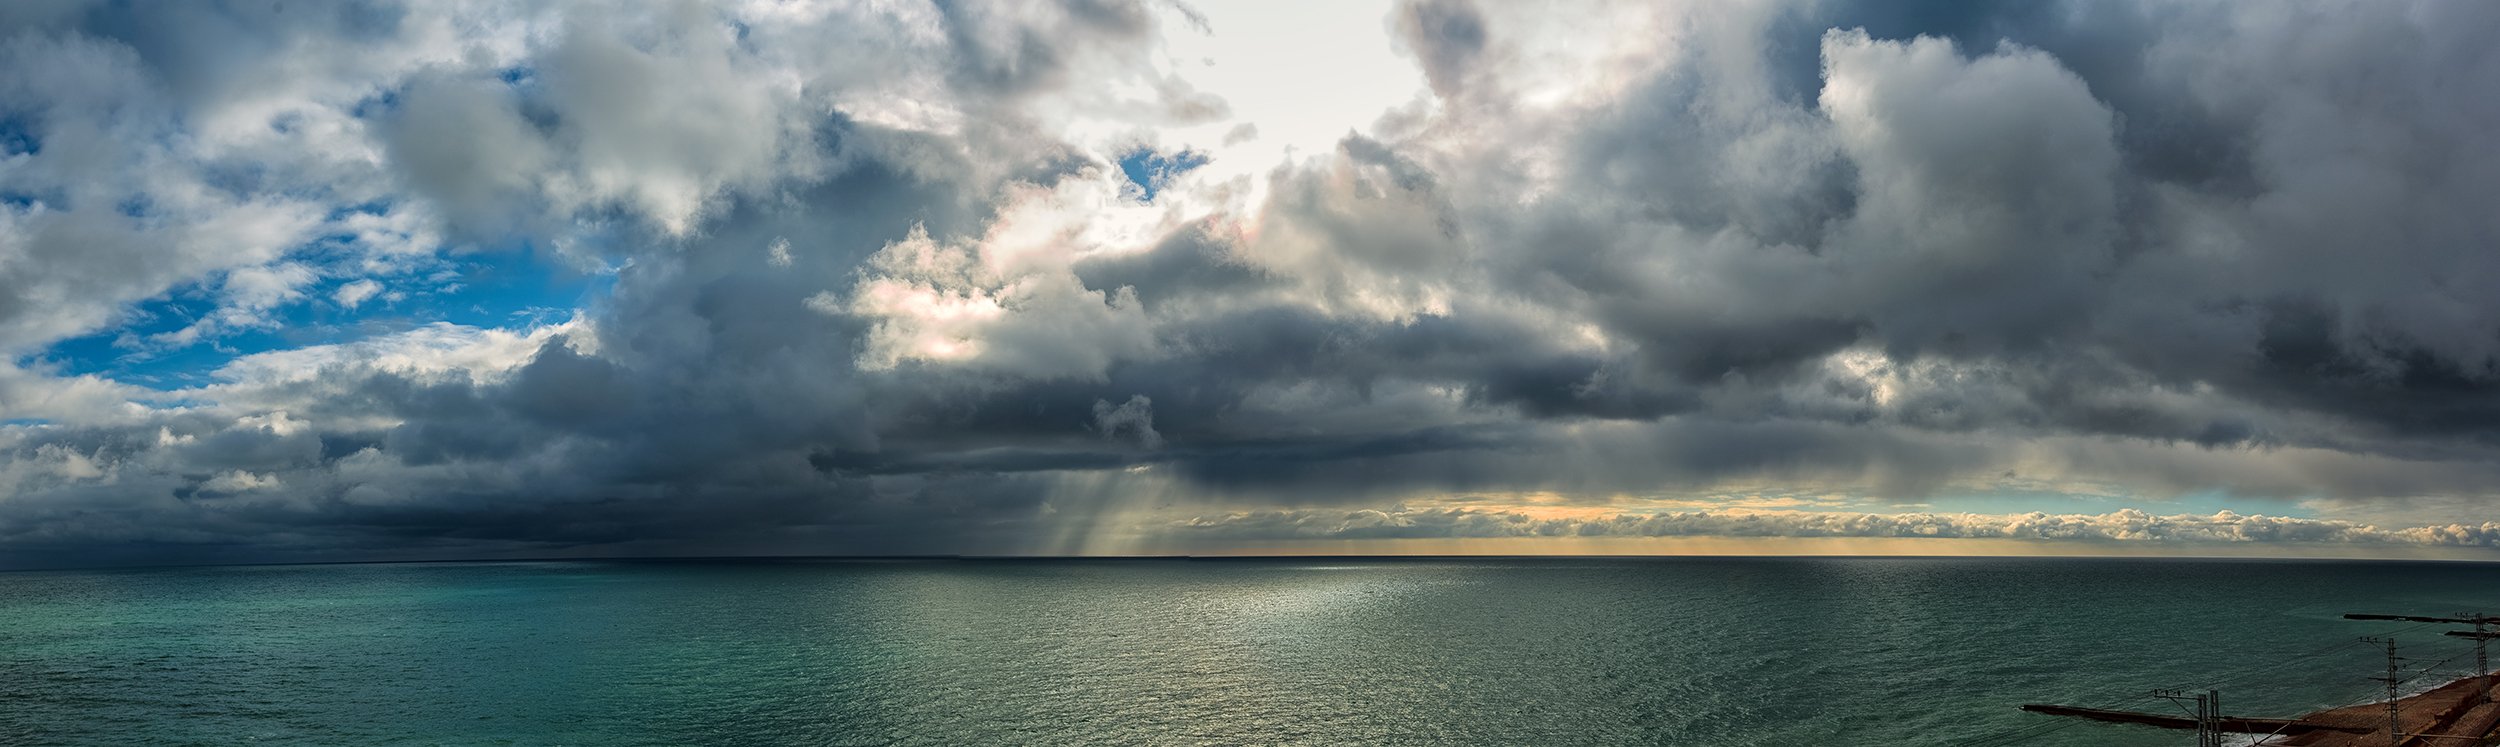 #облака #море #солнце #шторм #сочи #природа #волны #небо, Сергей Найбич